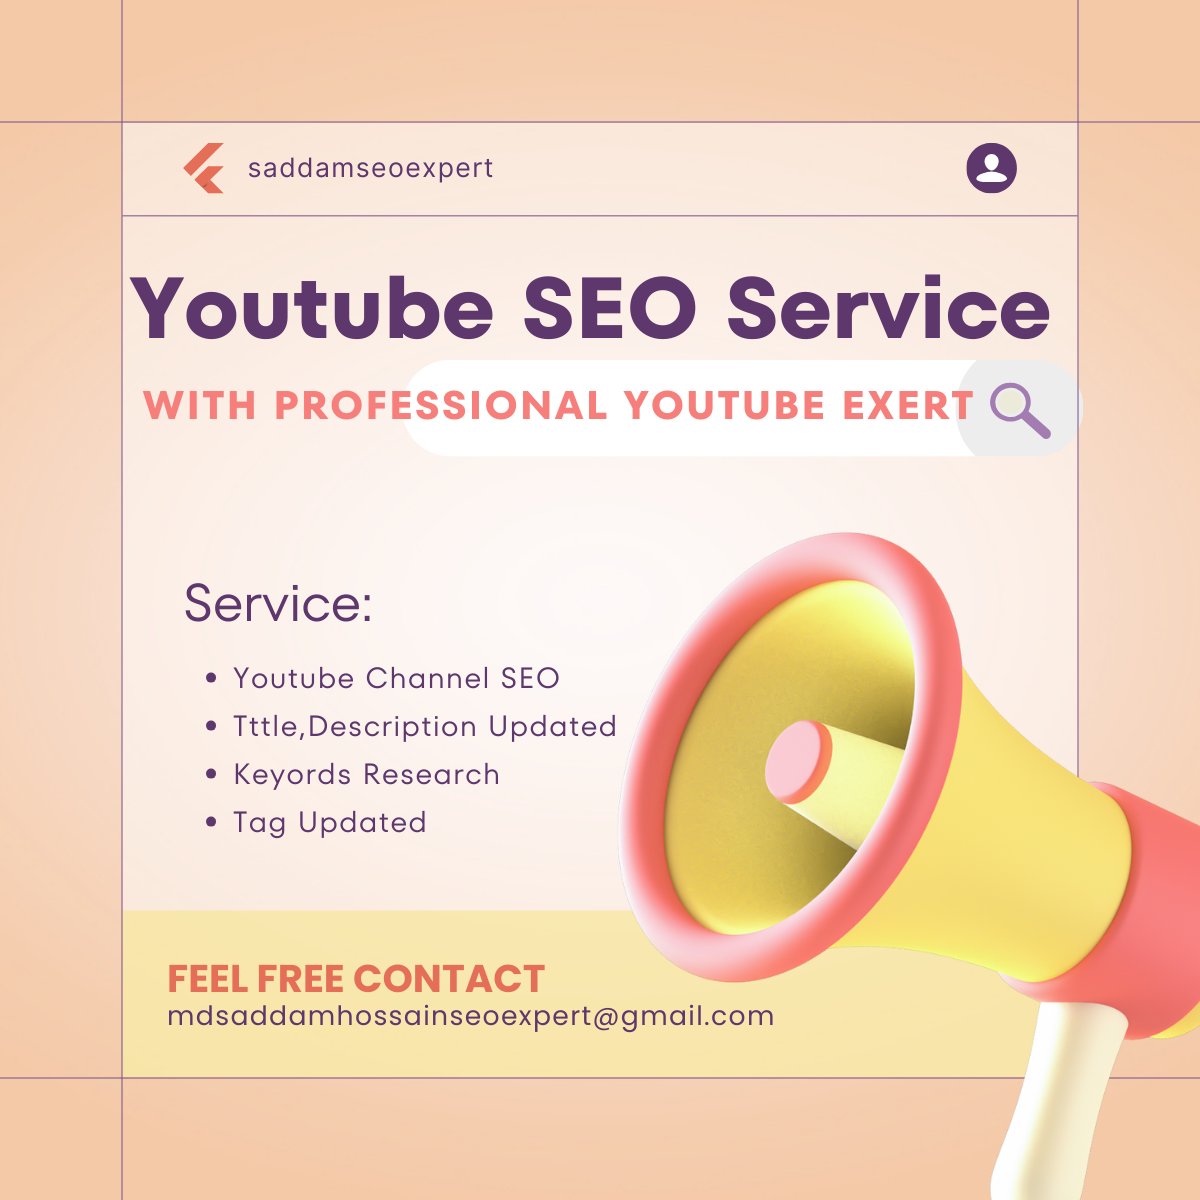 Youtube SEO Service:
#YouTubeSEO
#VideoOptimization
#YouTubeRanking
#VideoSEO
#YouTubeTraffic
#ChannelGrowth
#YouTubeAlgorithm
#SearchEngineOptimization
#YouTubeMarketing
#ContentStrategy